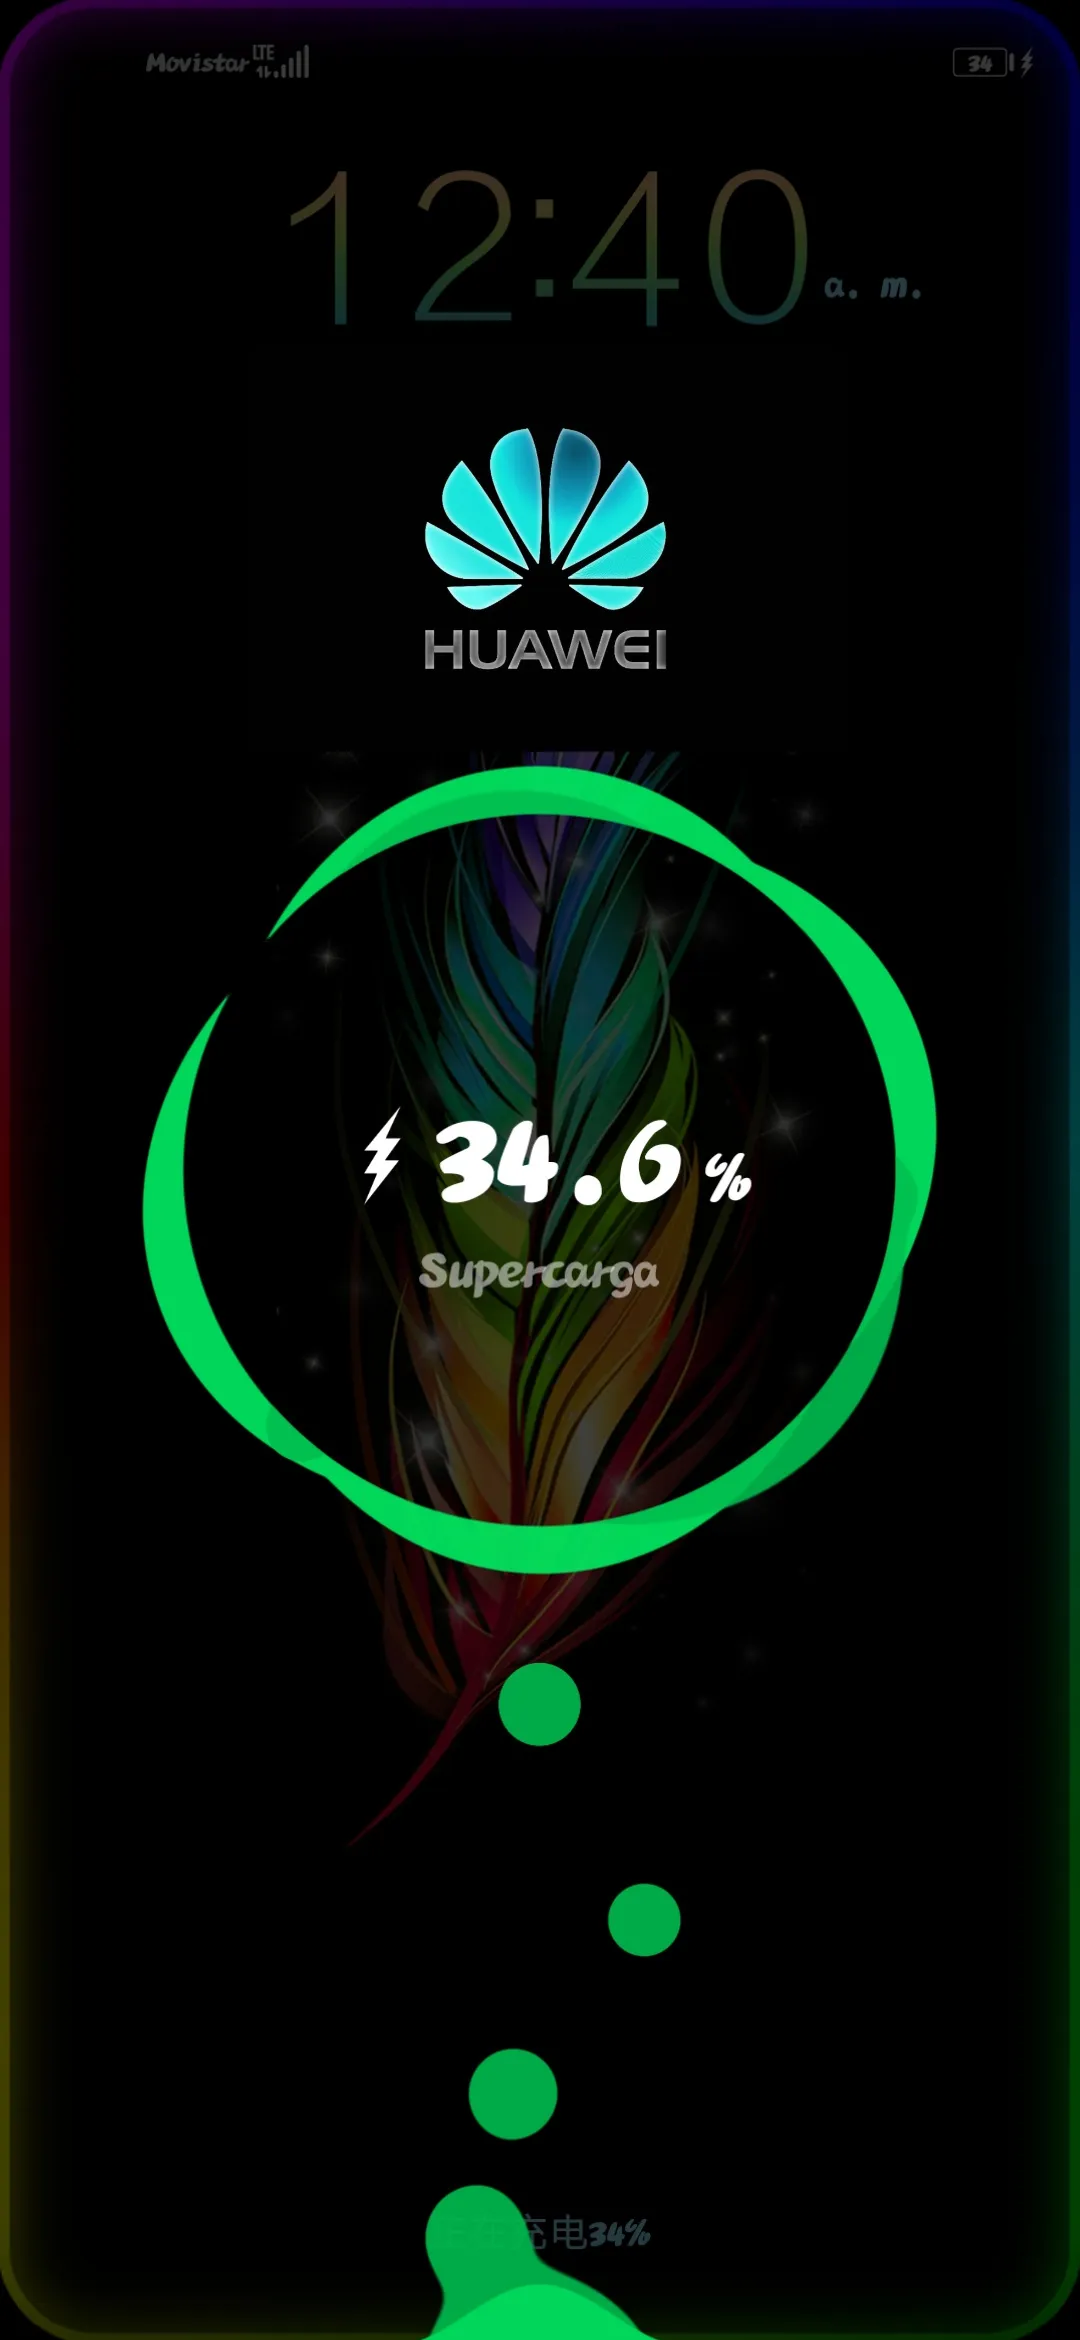 Huawei Wallpapers